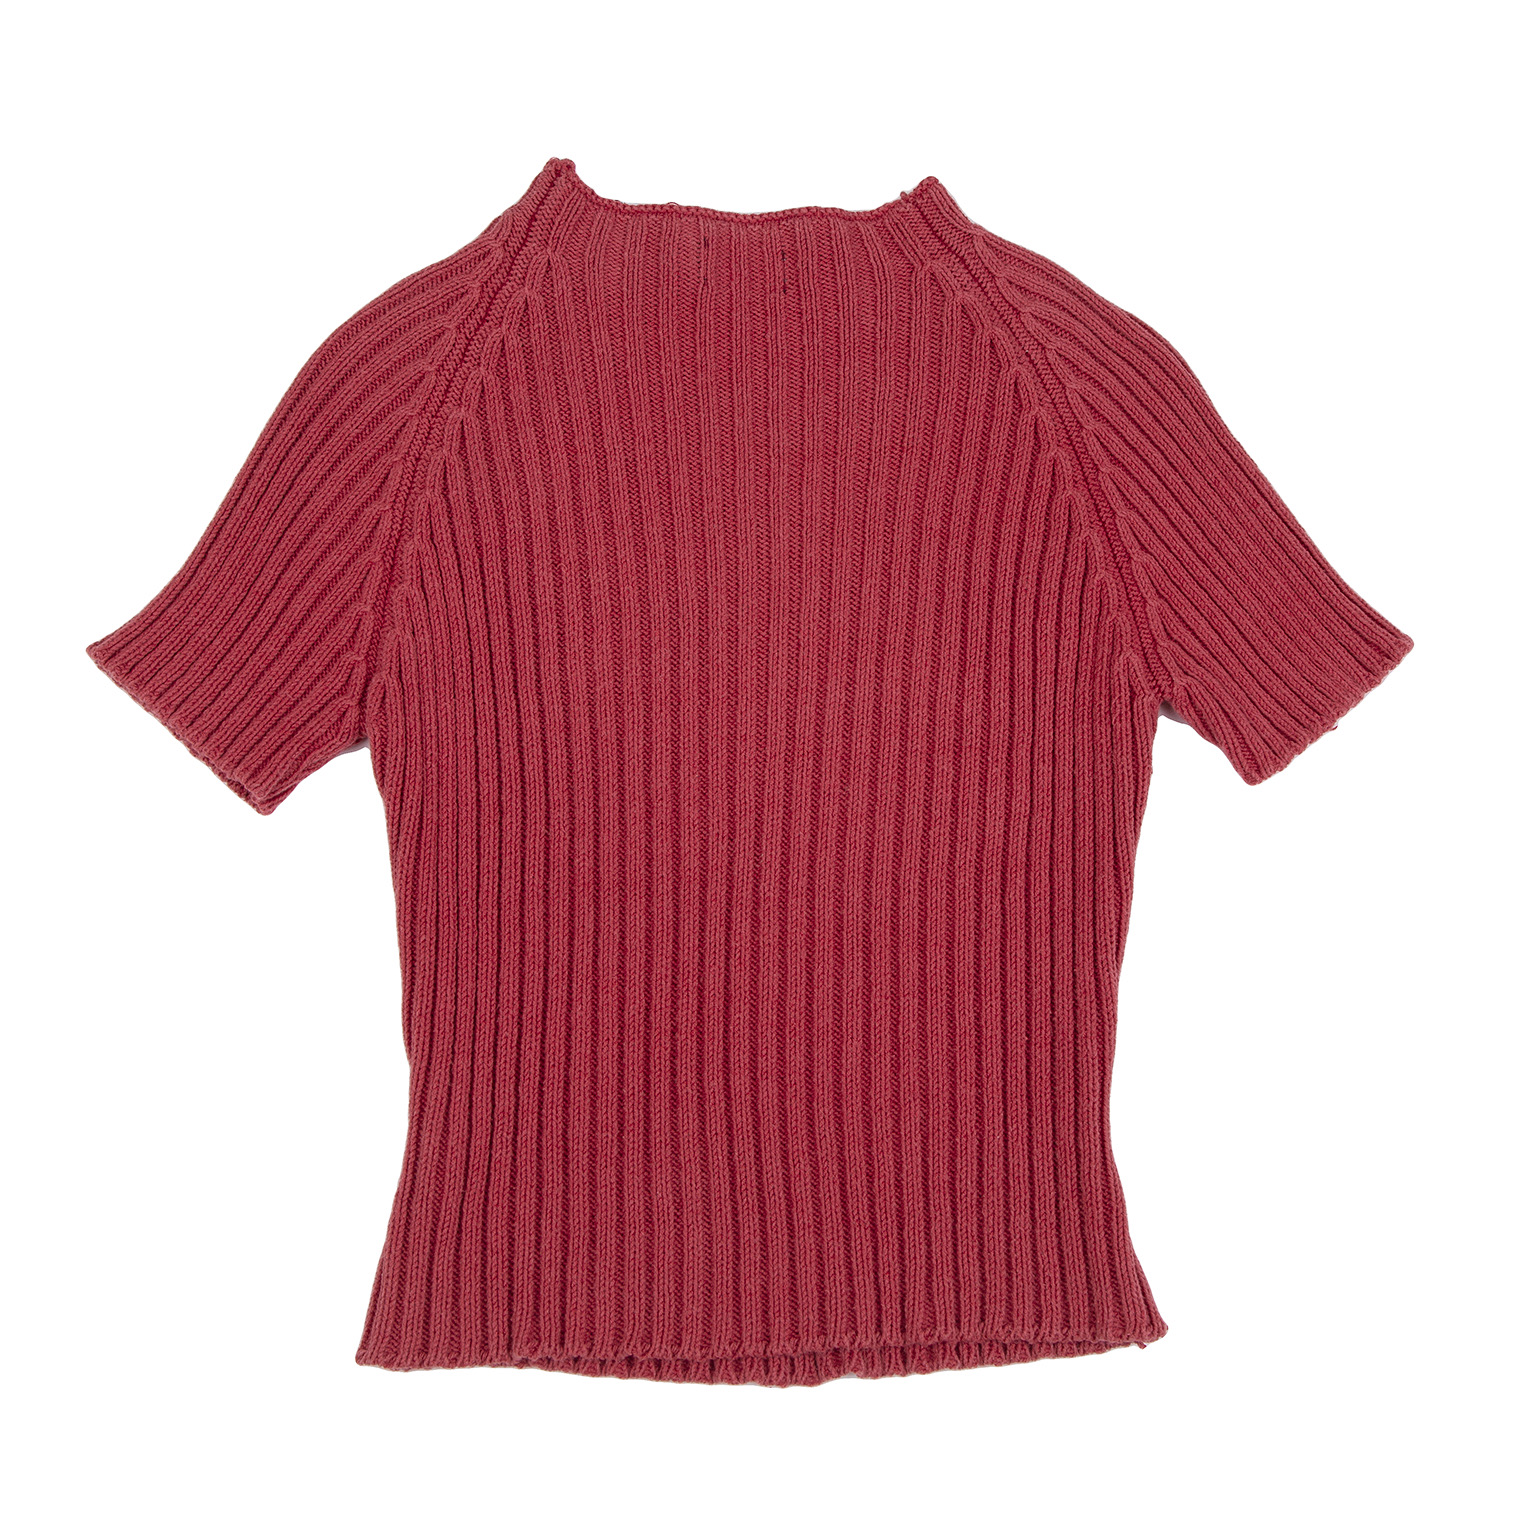 GIANFRANCO FERRE Zip Neck Short Sleeve Knit Sweater (Jumper) Red XS-S ...